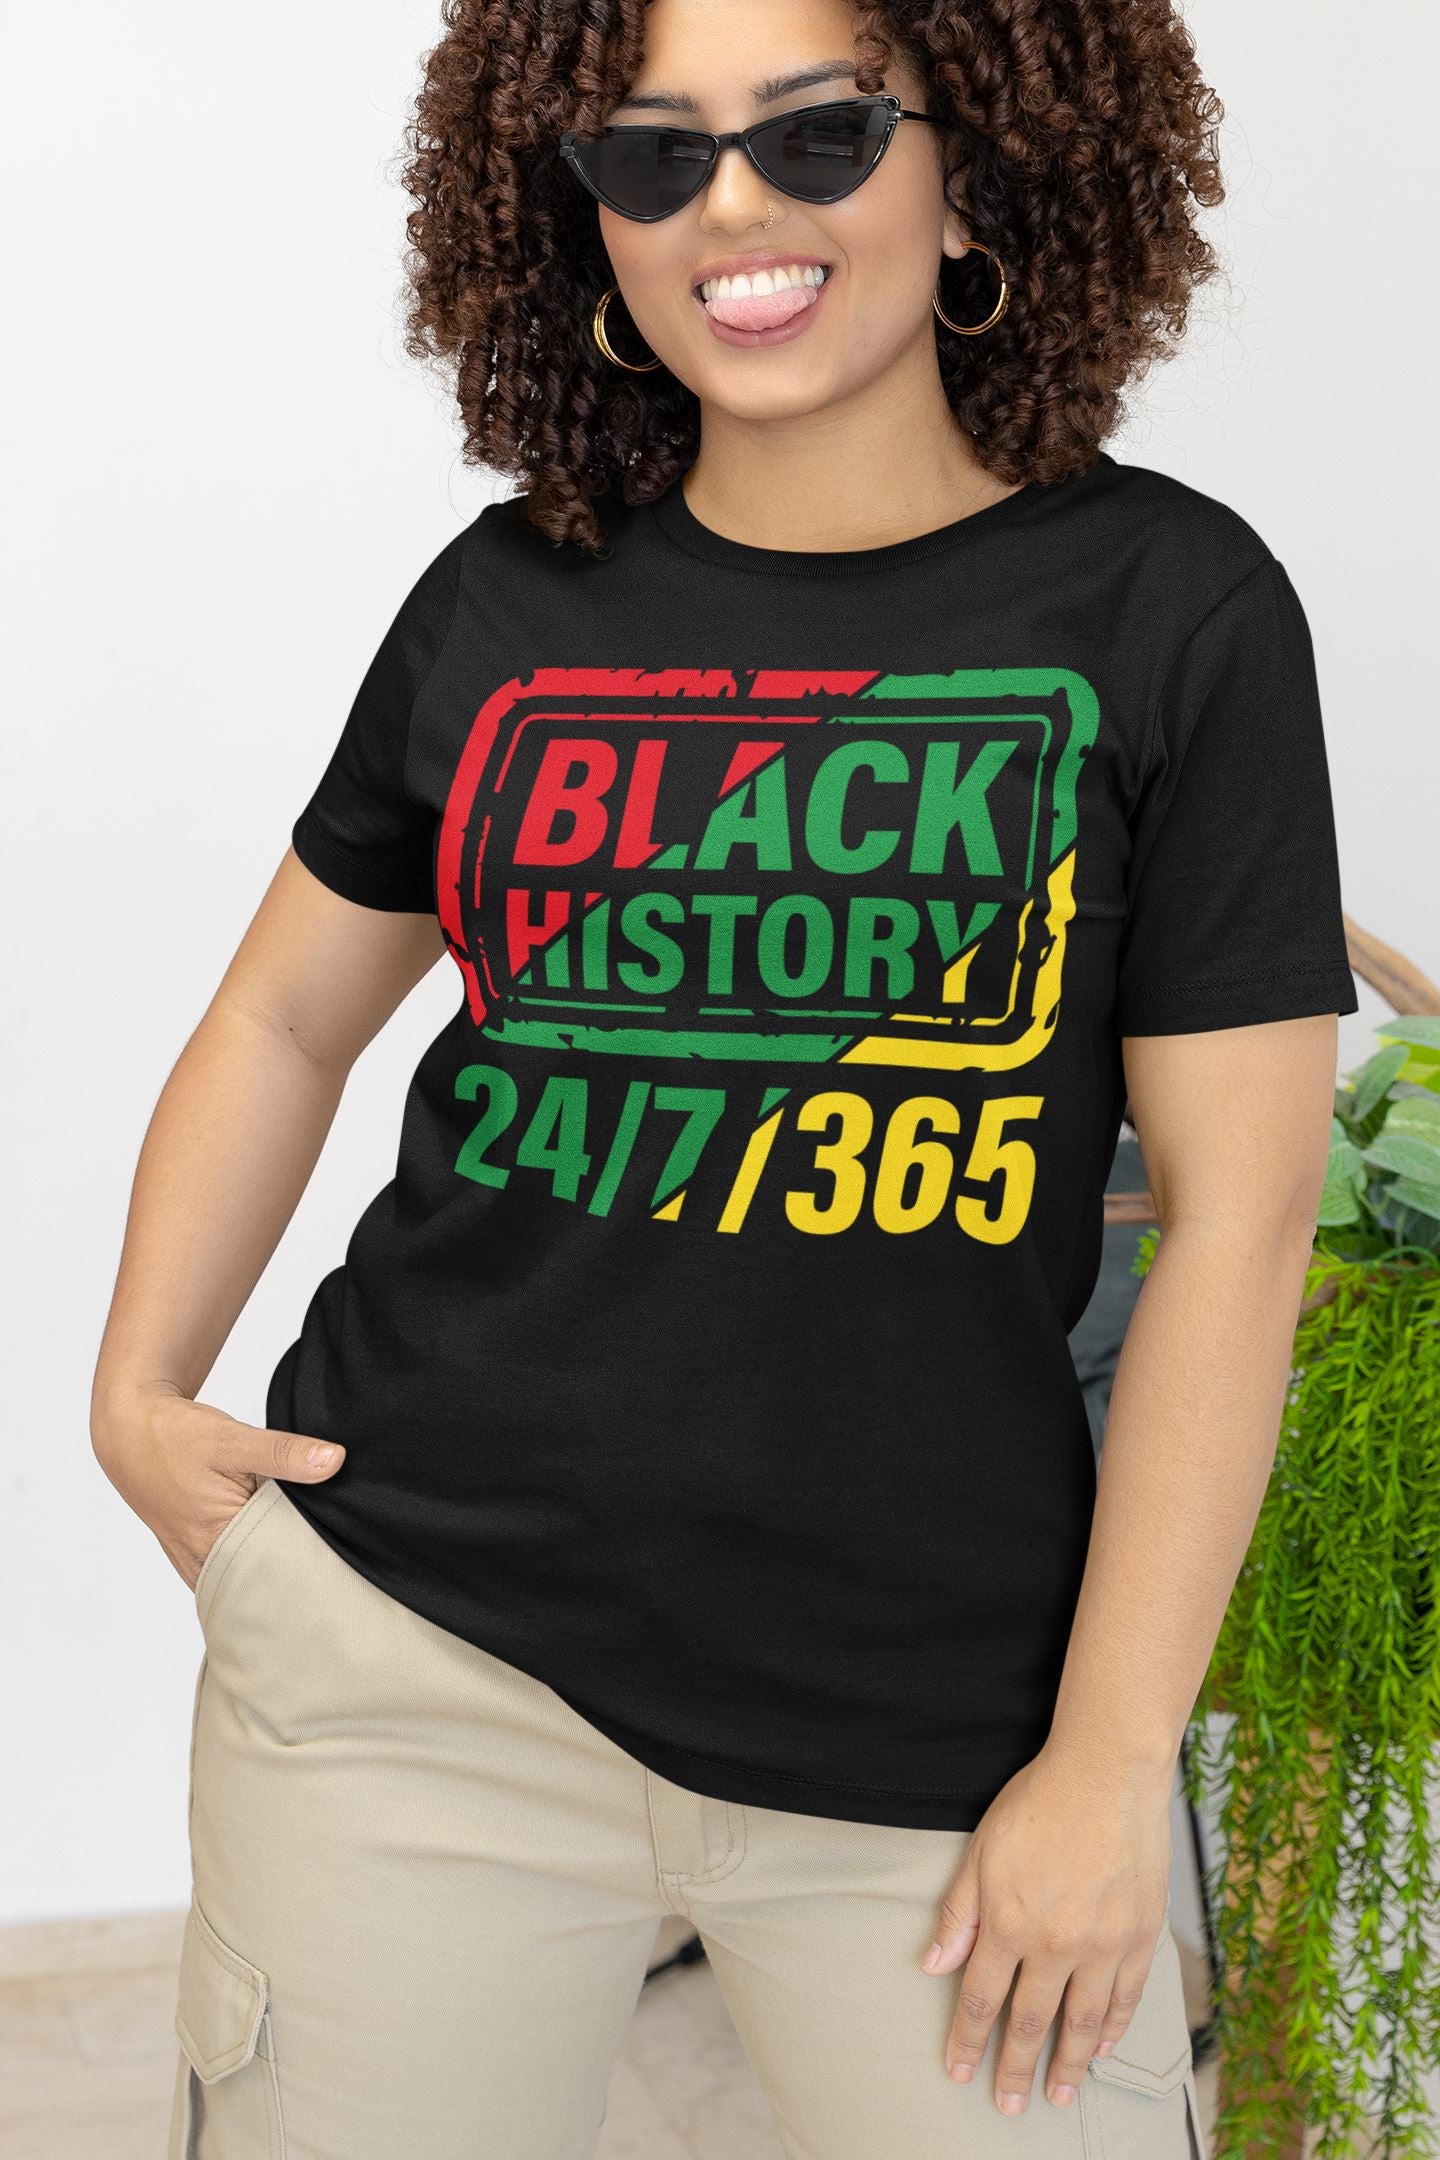 Black History Is 24/7/365 T-Shirt Apparel Gearment 